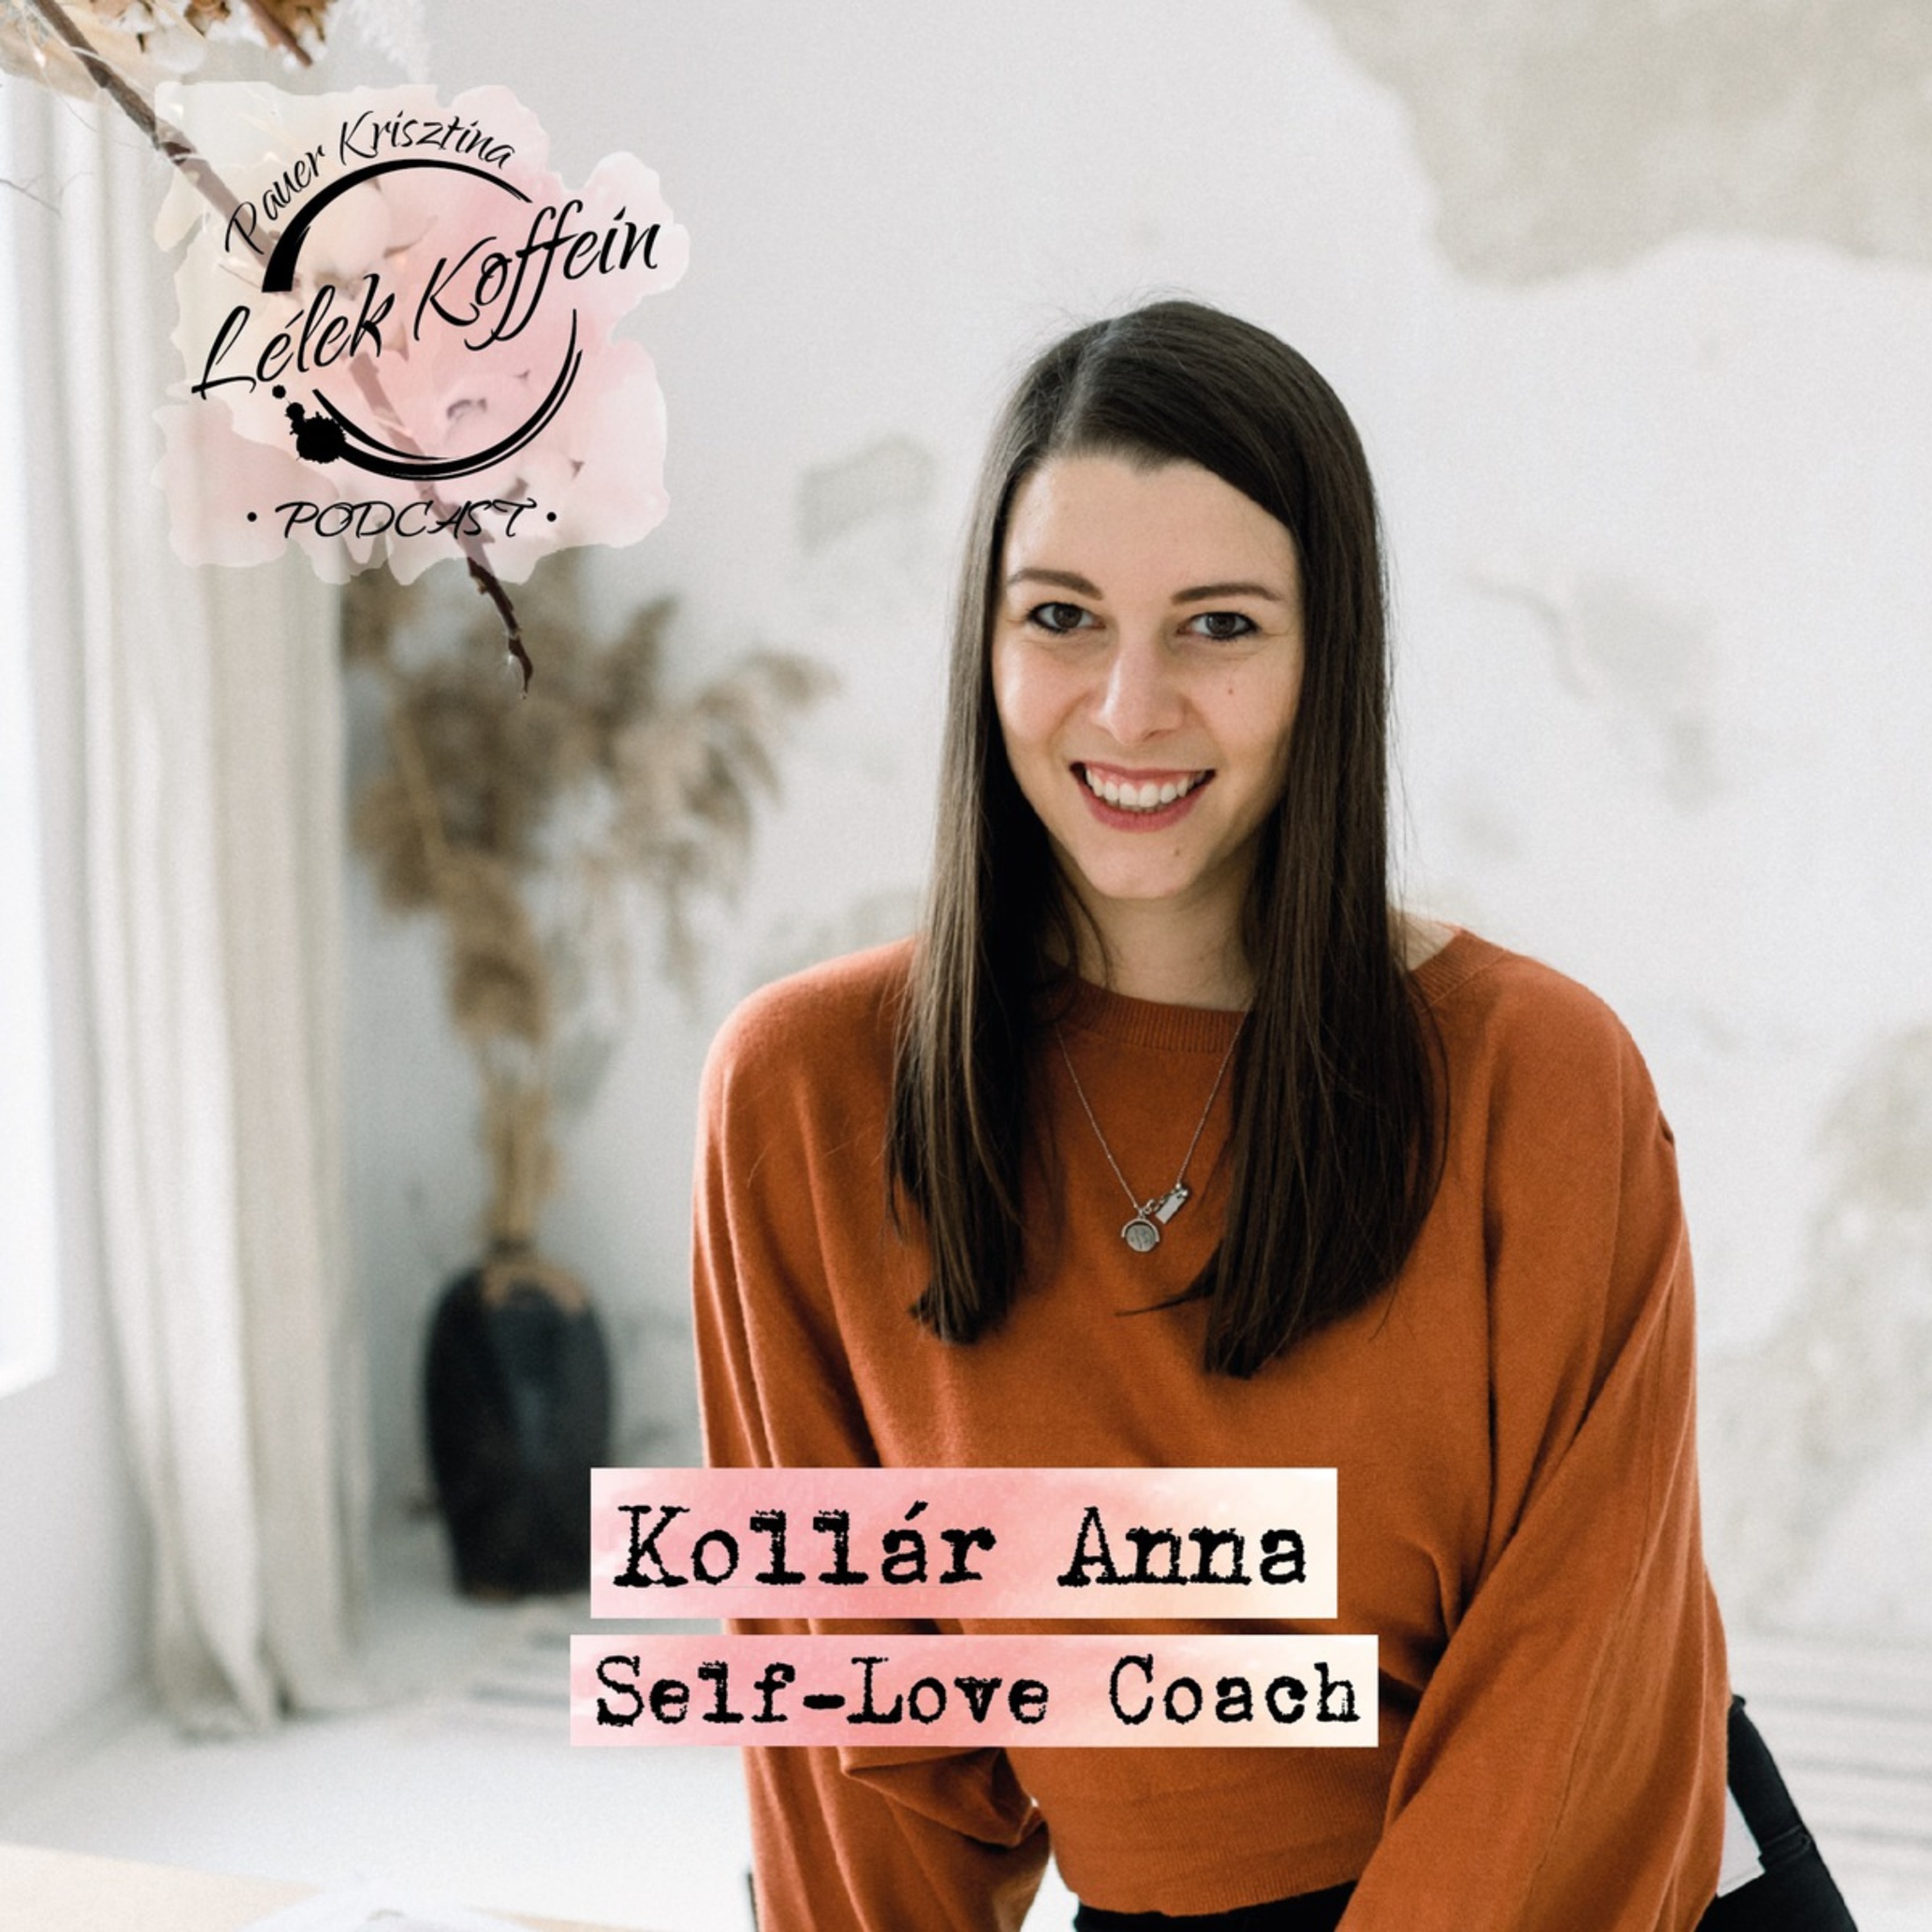 Vendégem: Kollár Anna Self-Love Coach